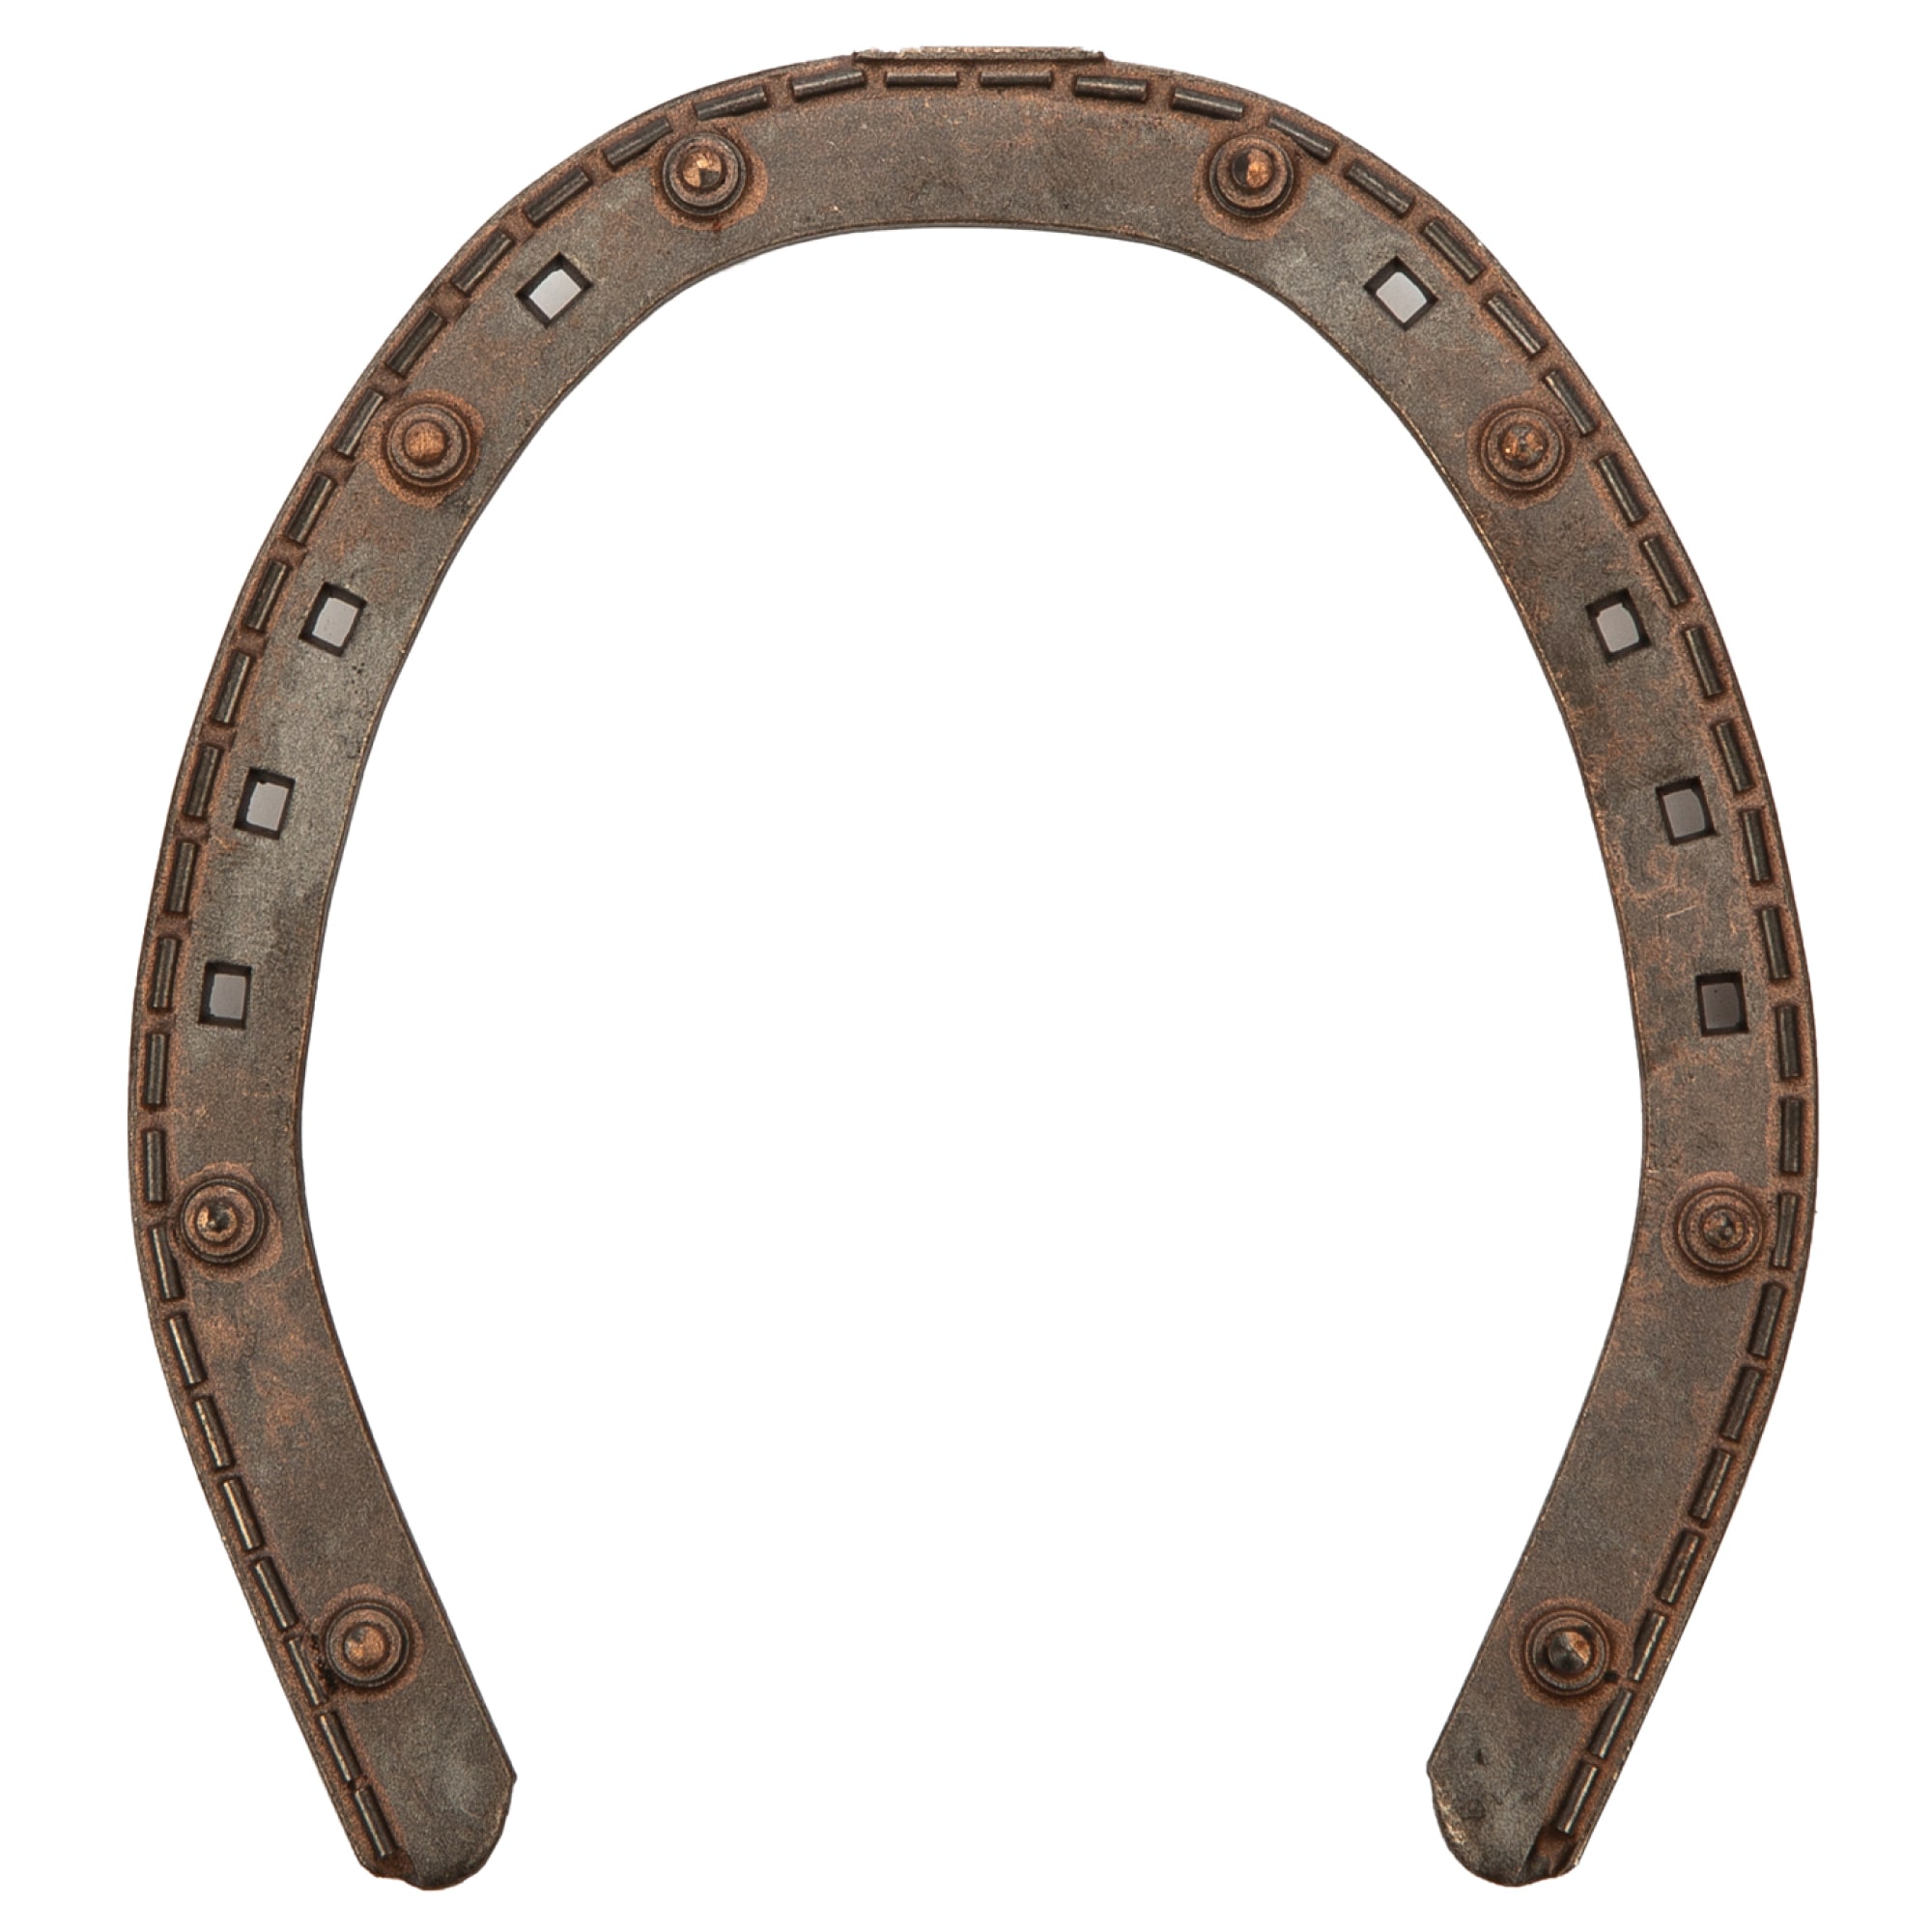 Hard metal horseshoe (goldshoe) 15x5, hind, w/8 studs (7mm)